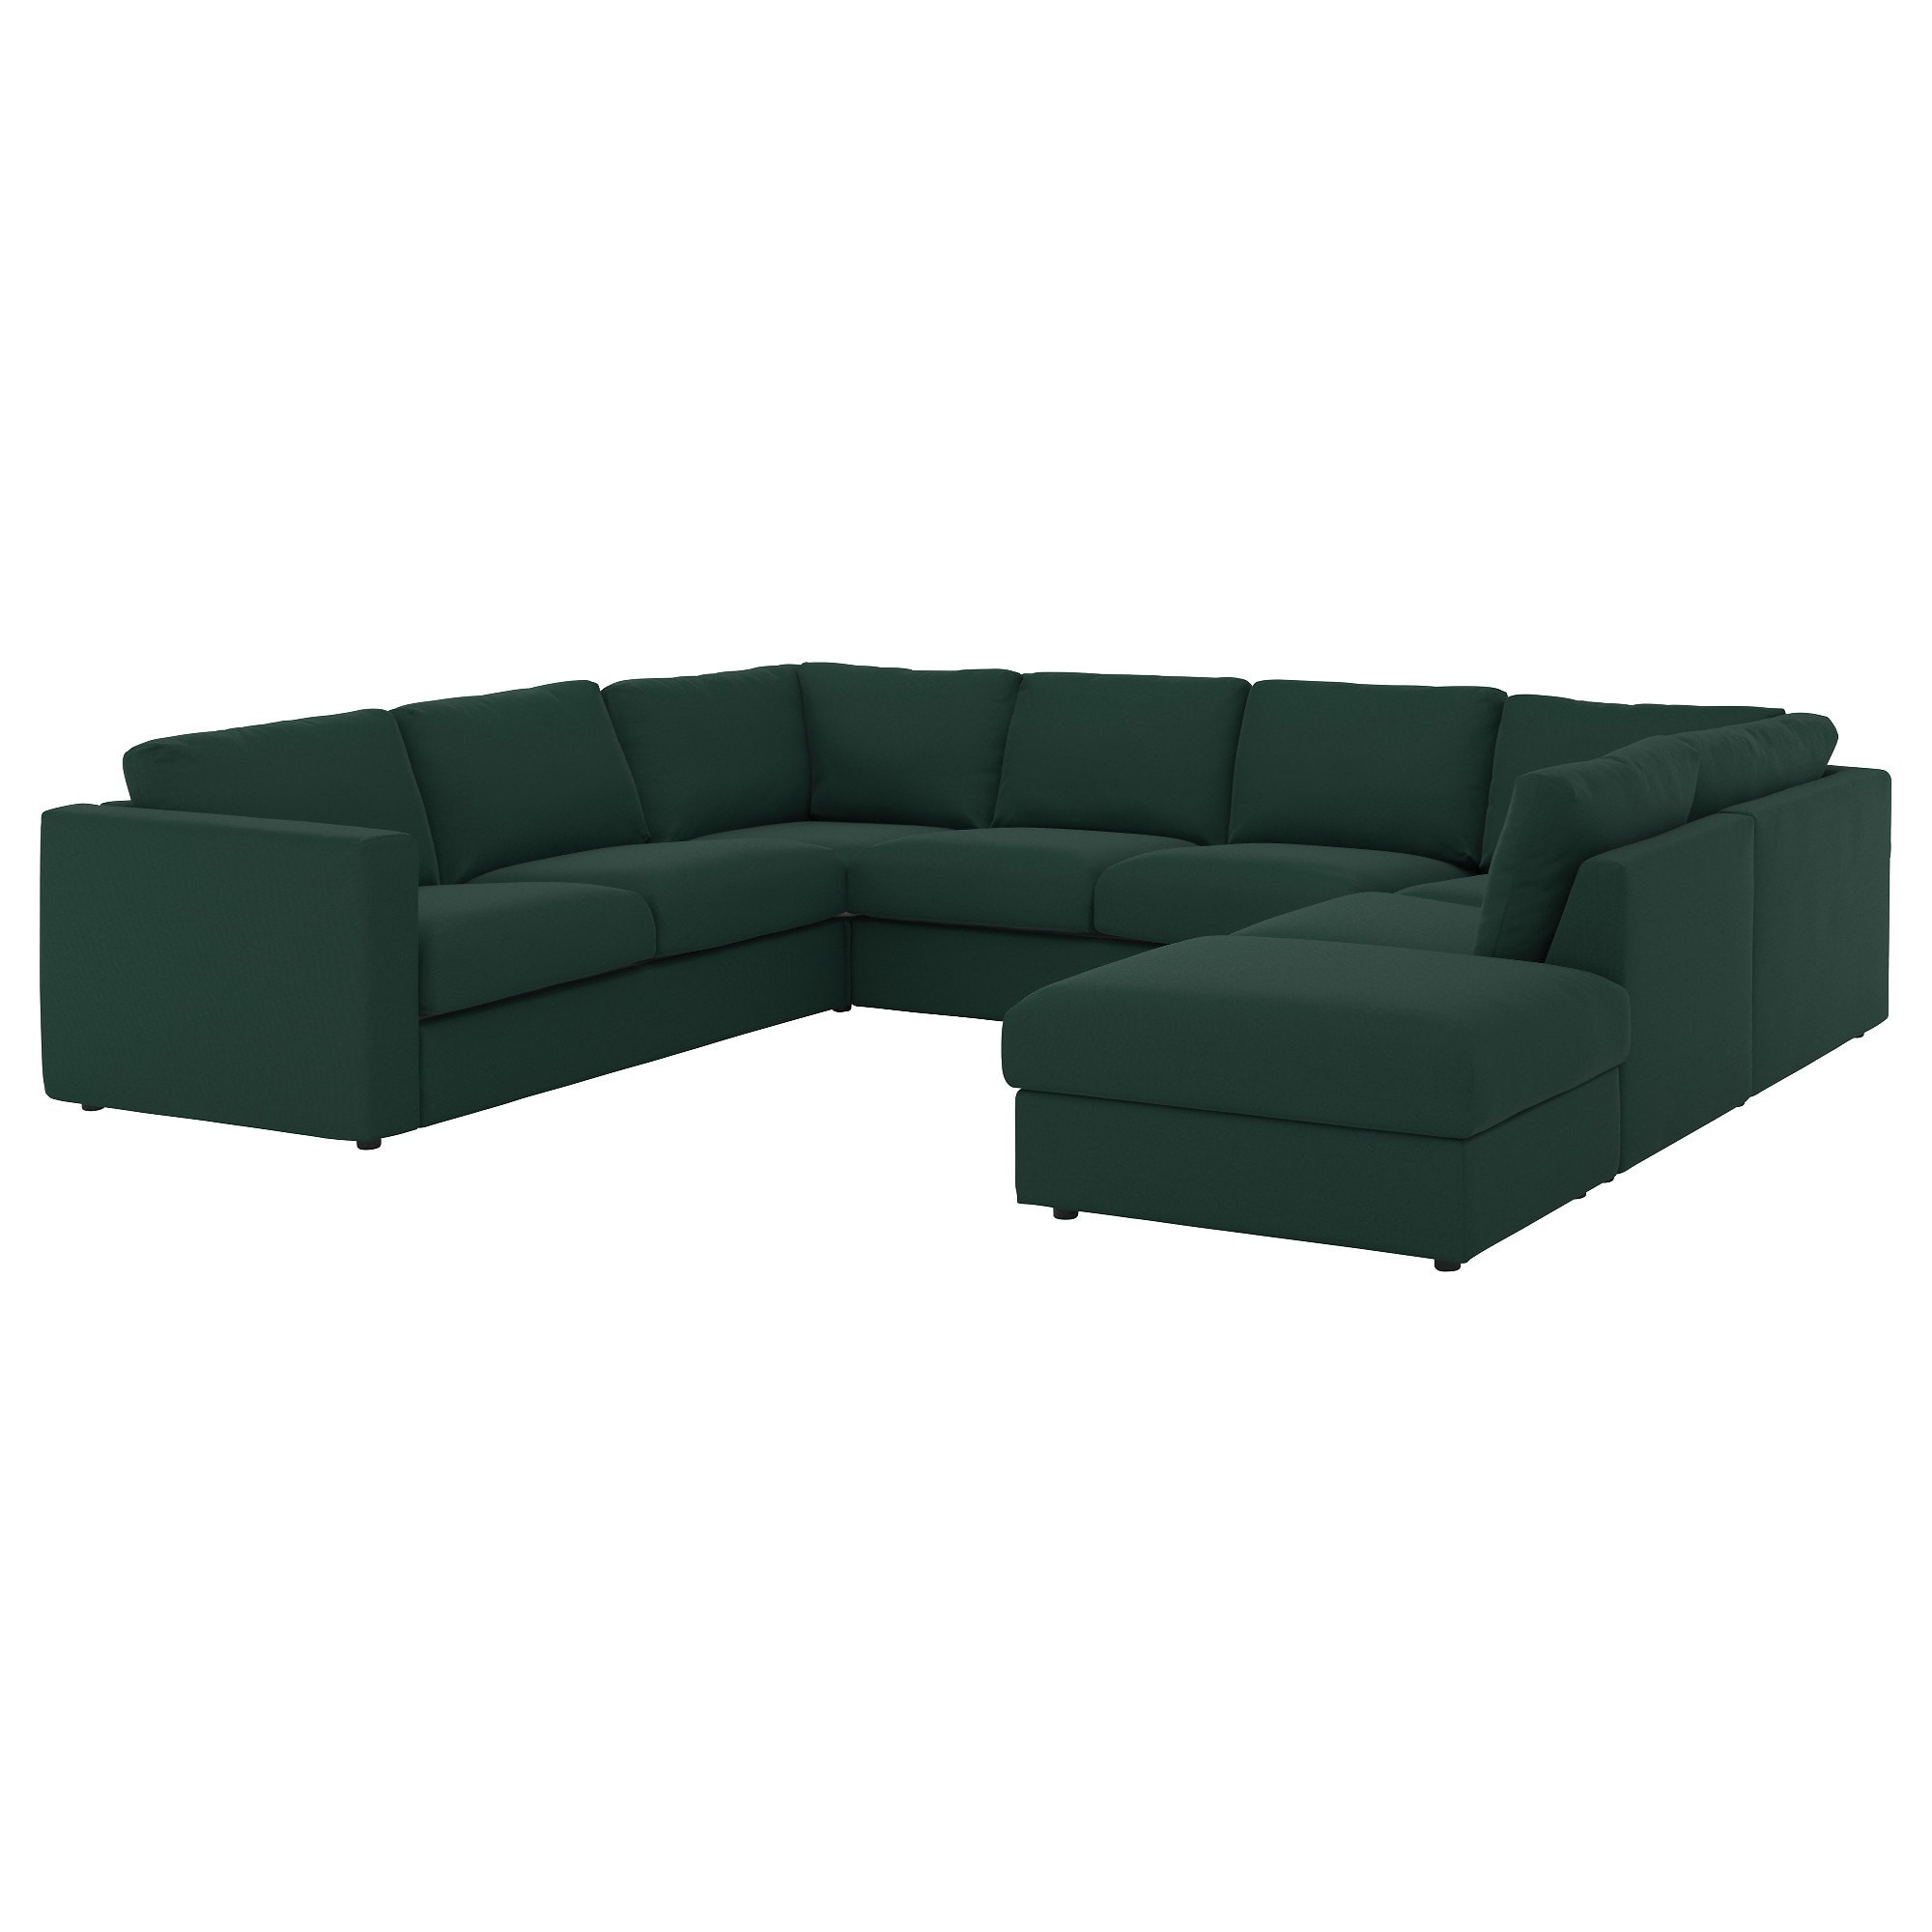 Best ideas about Ikea Modular Sofa
. Save or Pin Modular Sofas & Sectional Sofas Now.